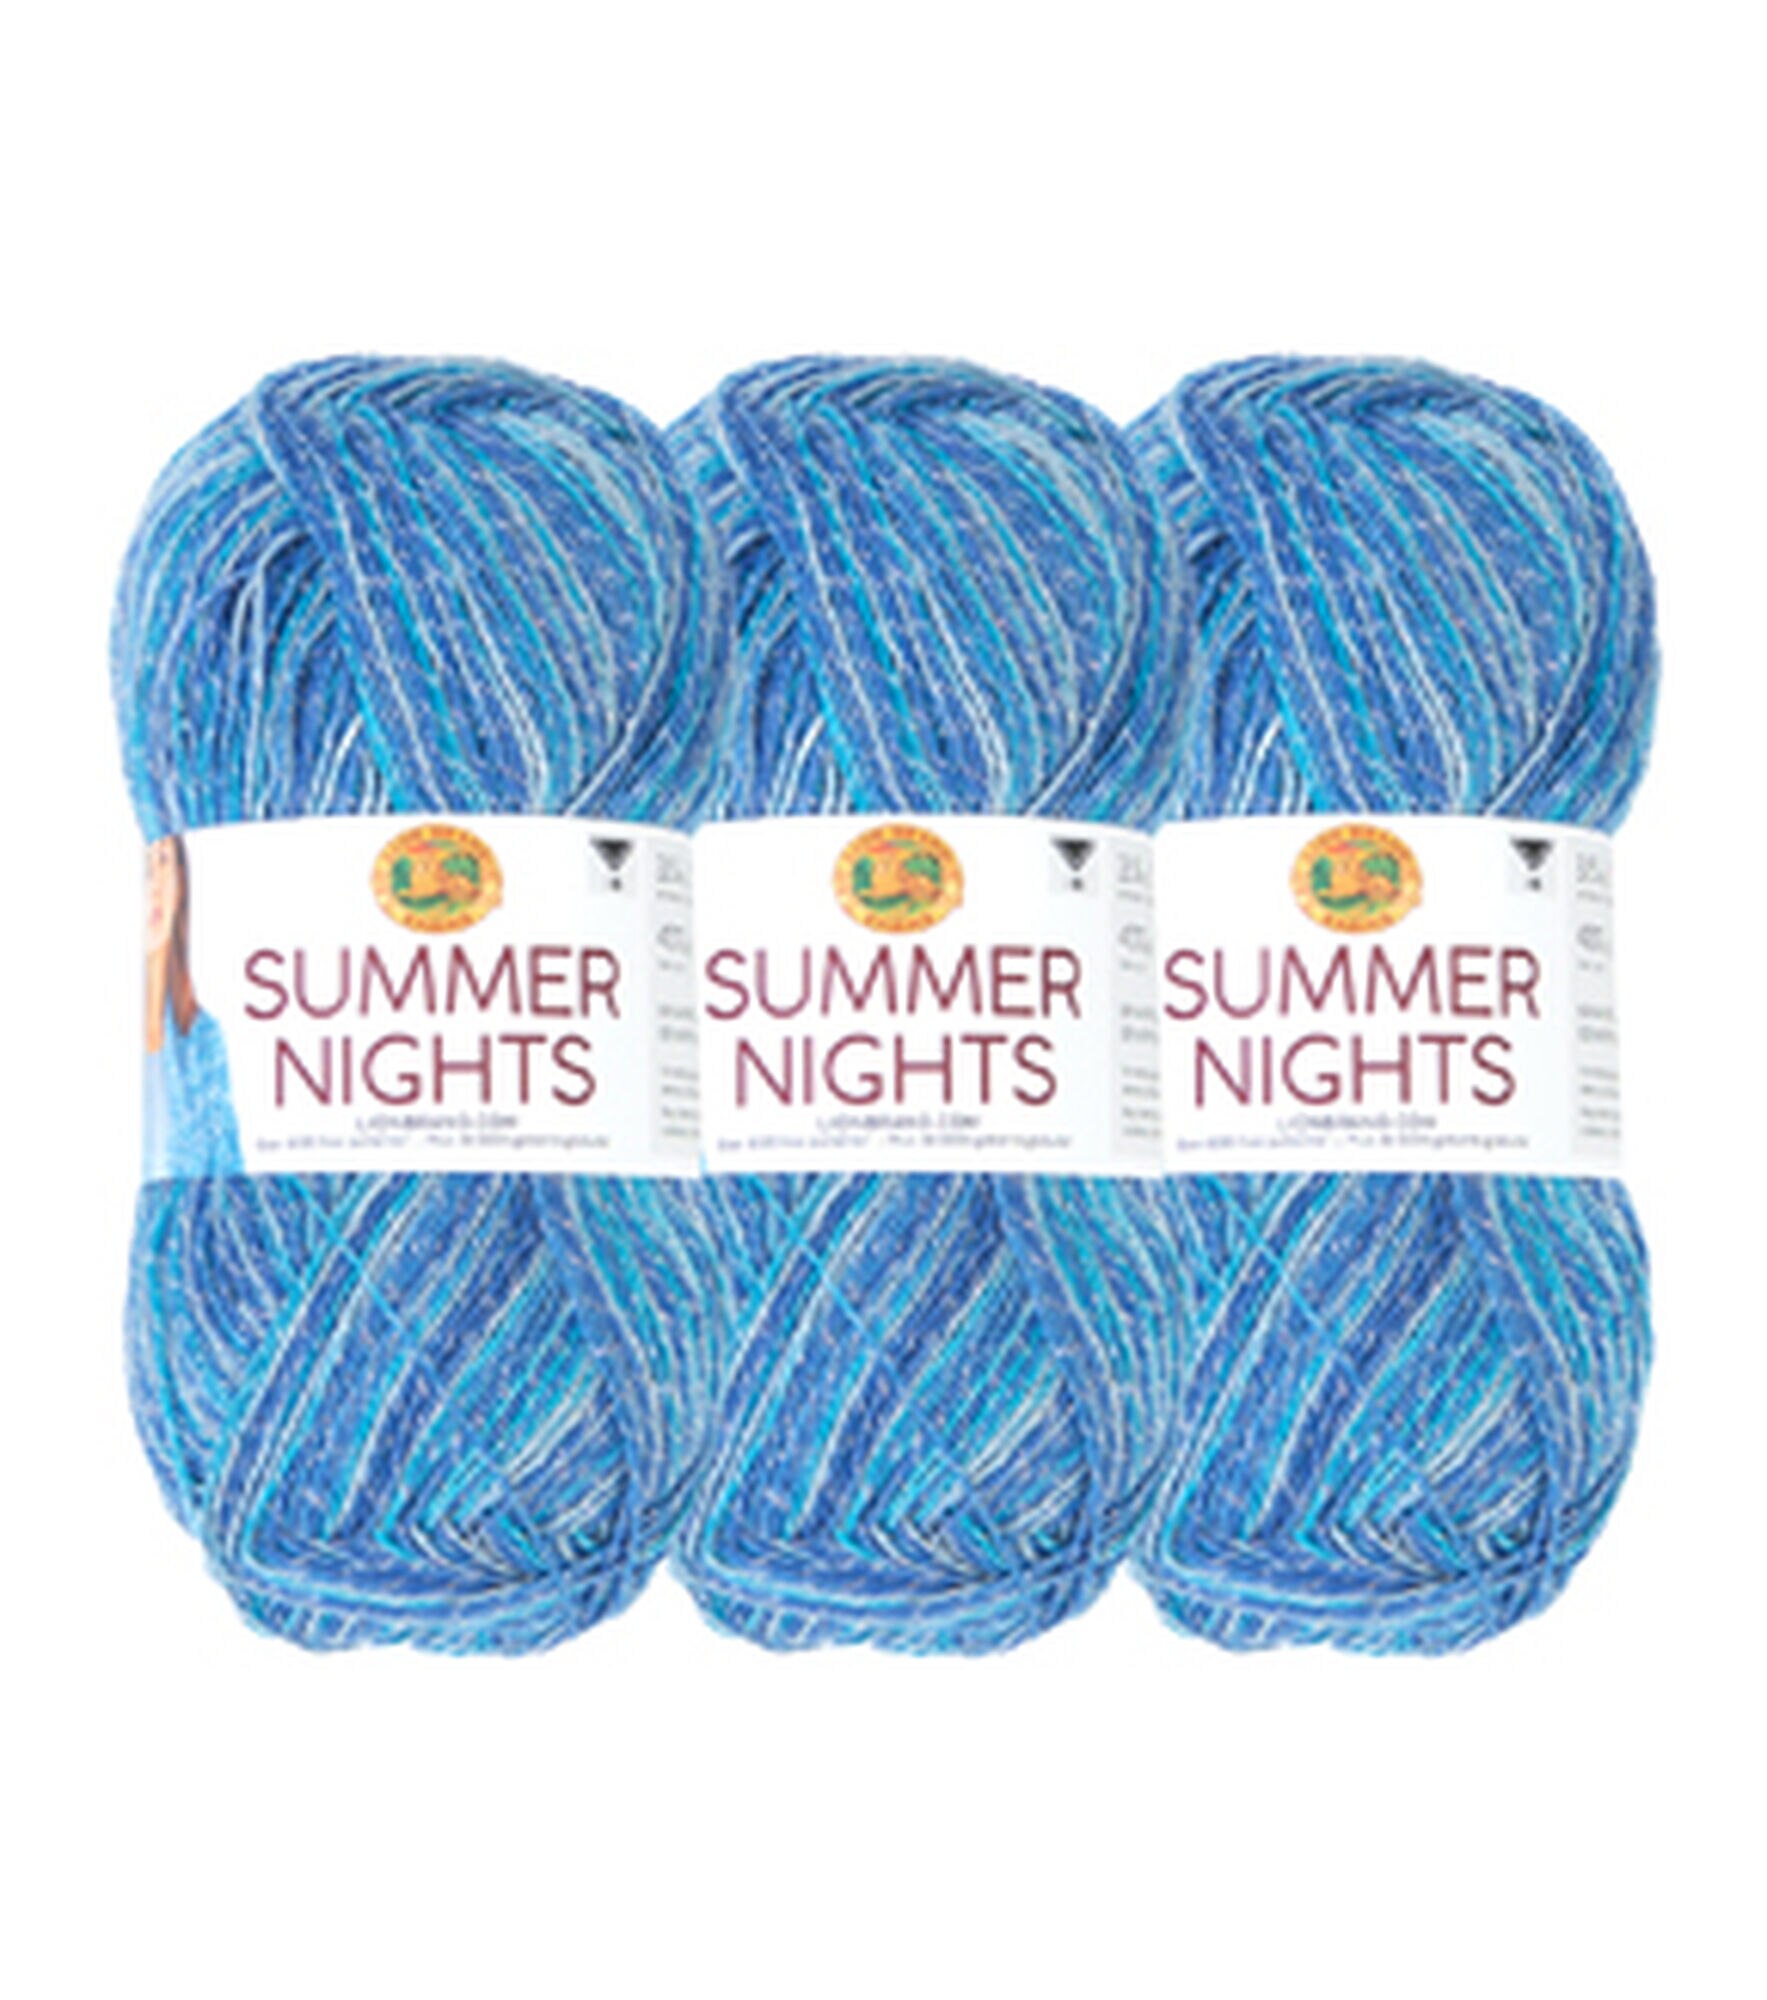 Yarn Review - Lionbrand Summer Nights - Bag O Day Crochet 